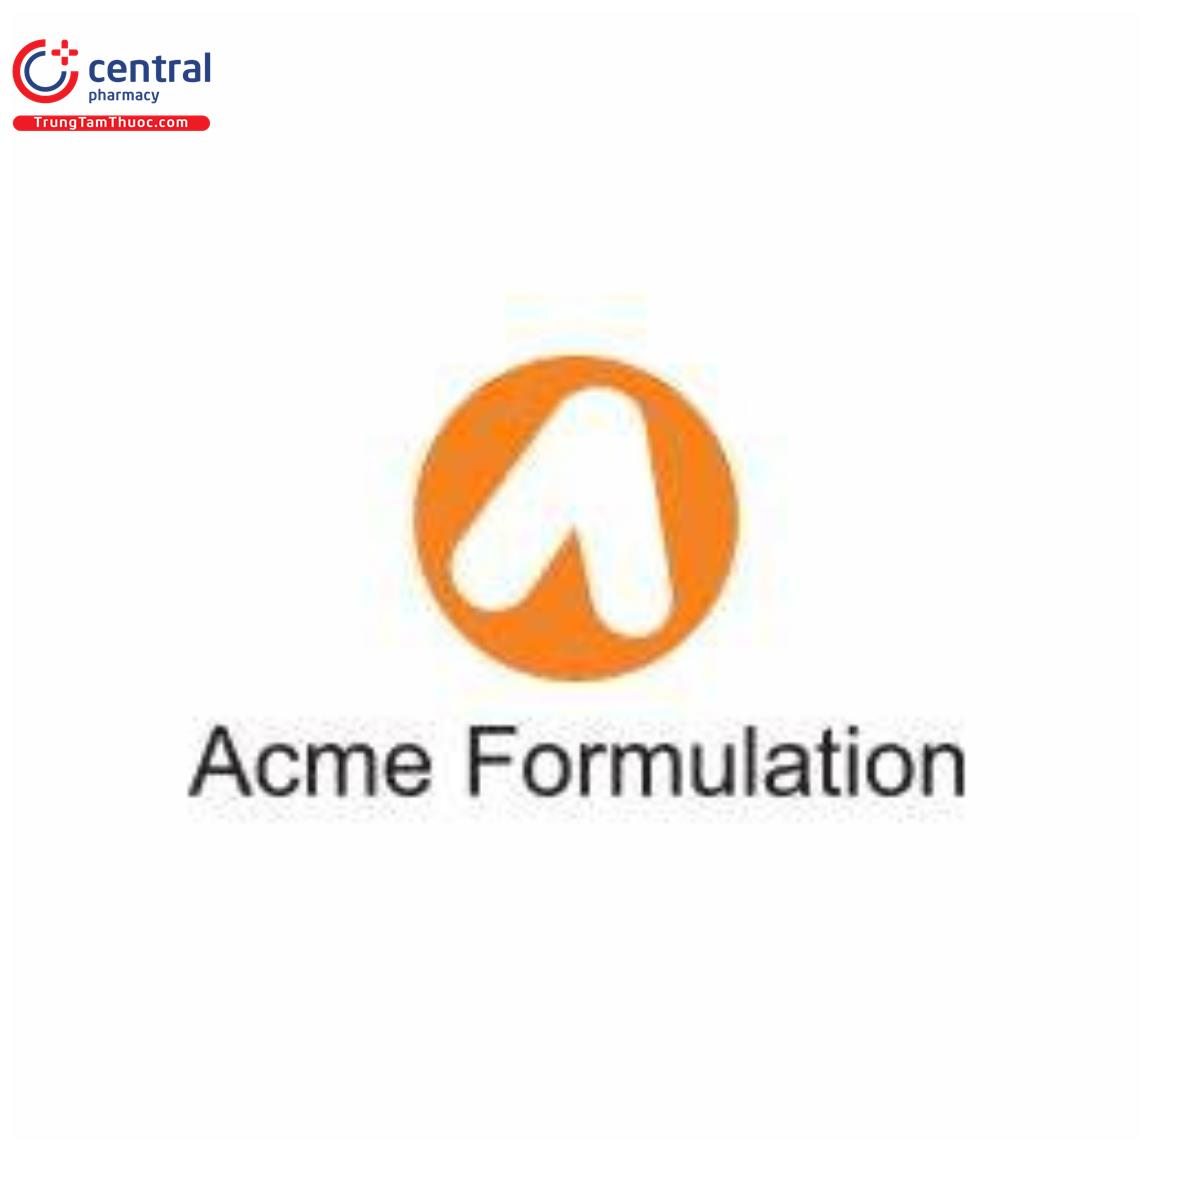 Acme Formulation